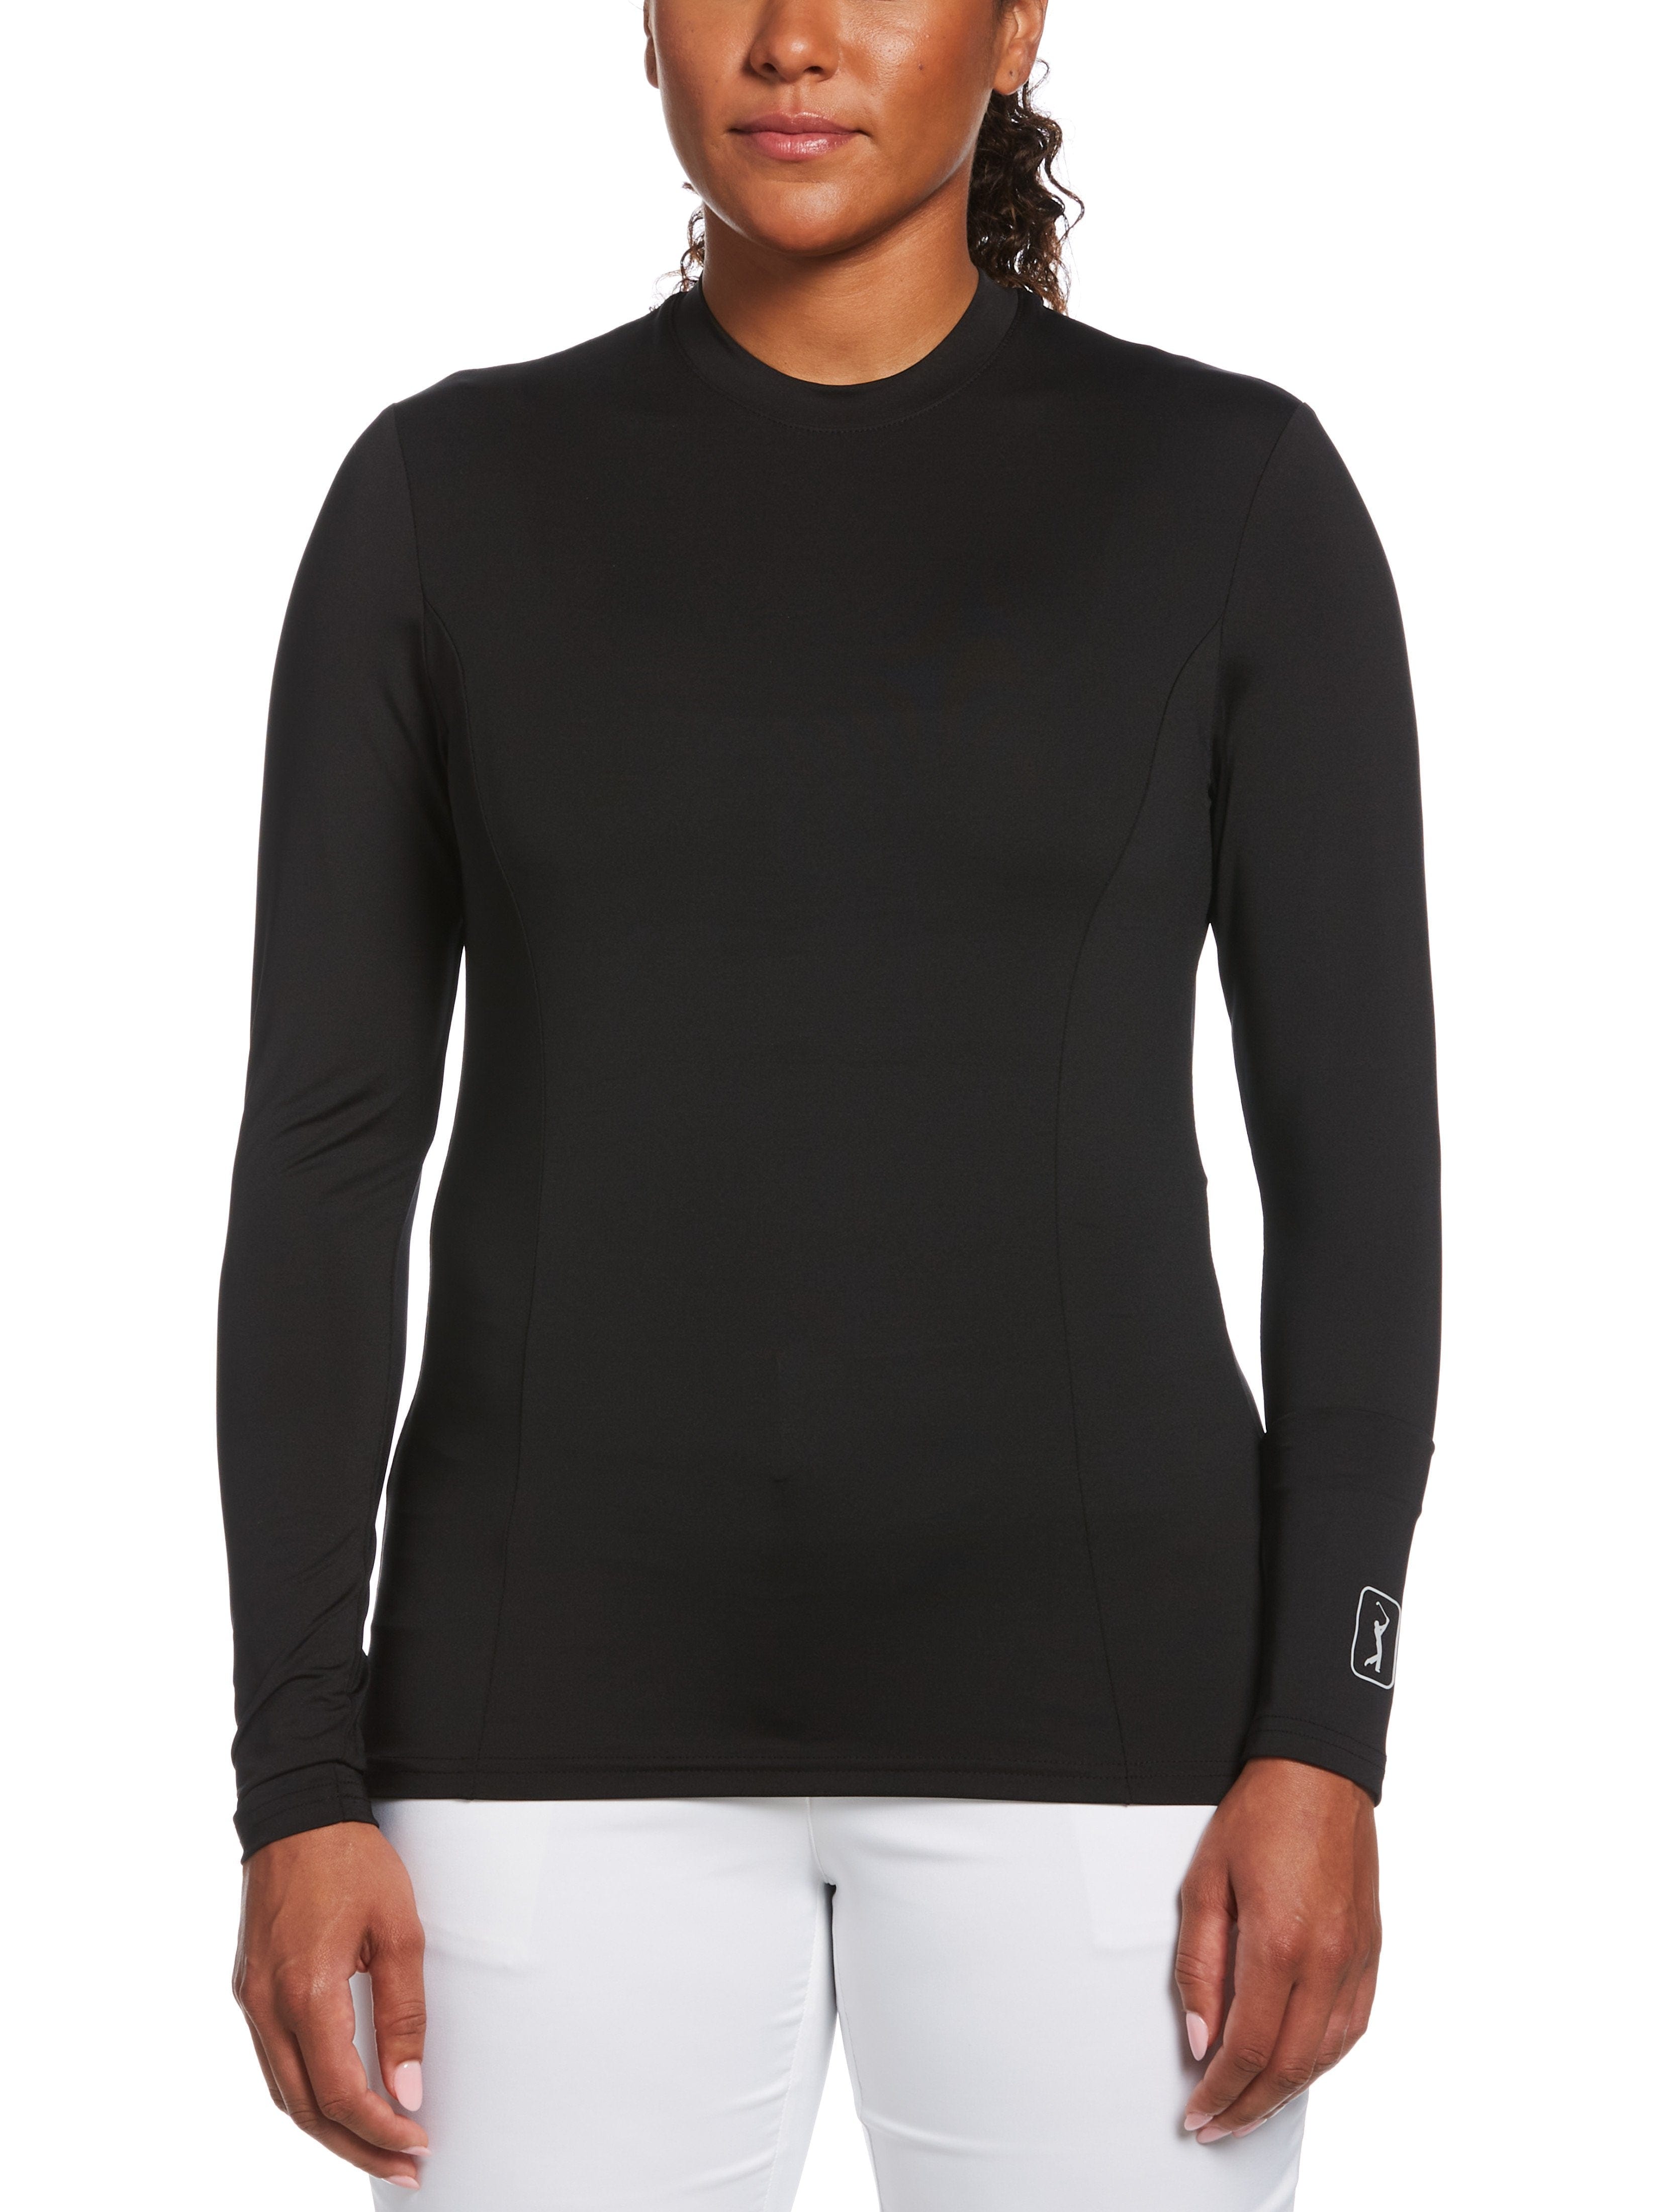 PGA TOUR Apparel Womens Solar Block Crew Jacket Top, Size XL, Black, Polyester/Elastane | Golf Apparel Shop